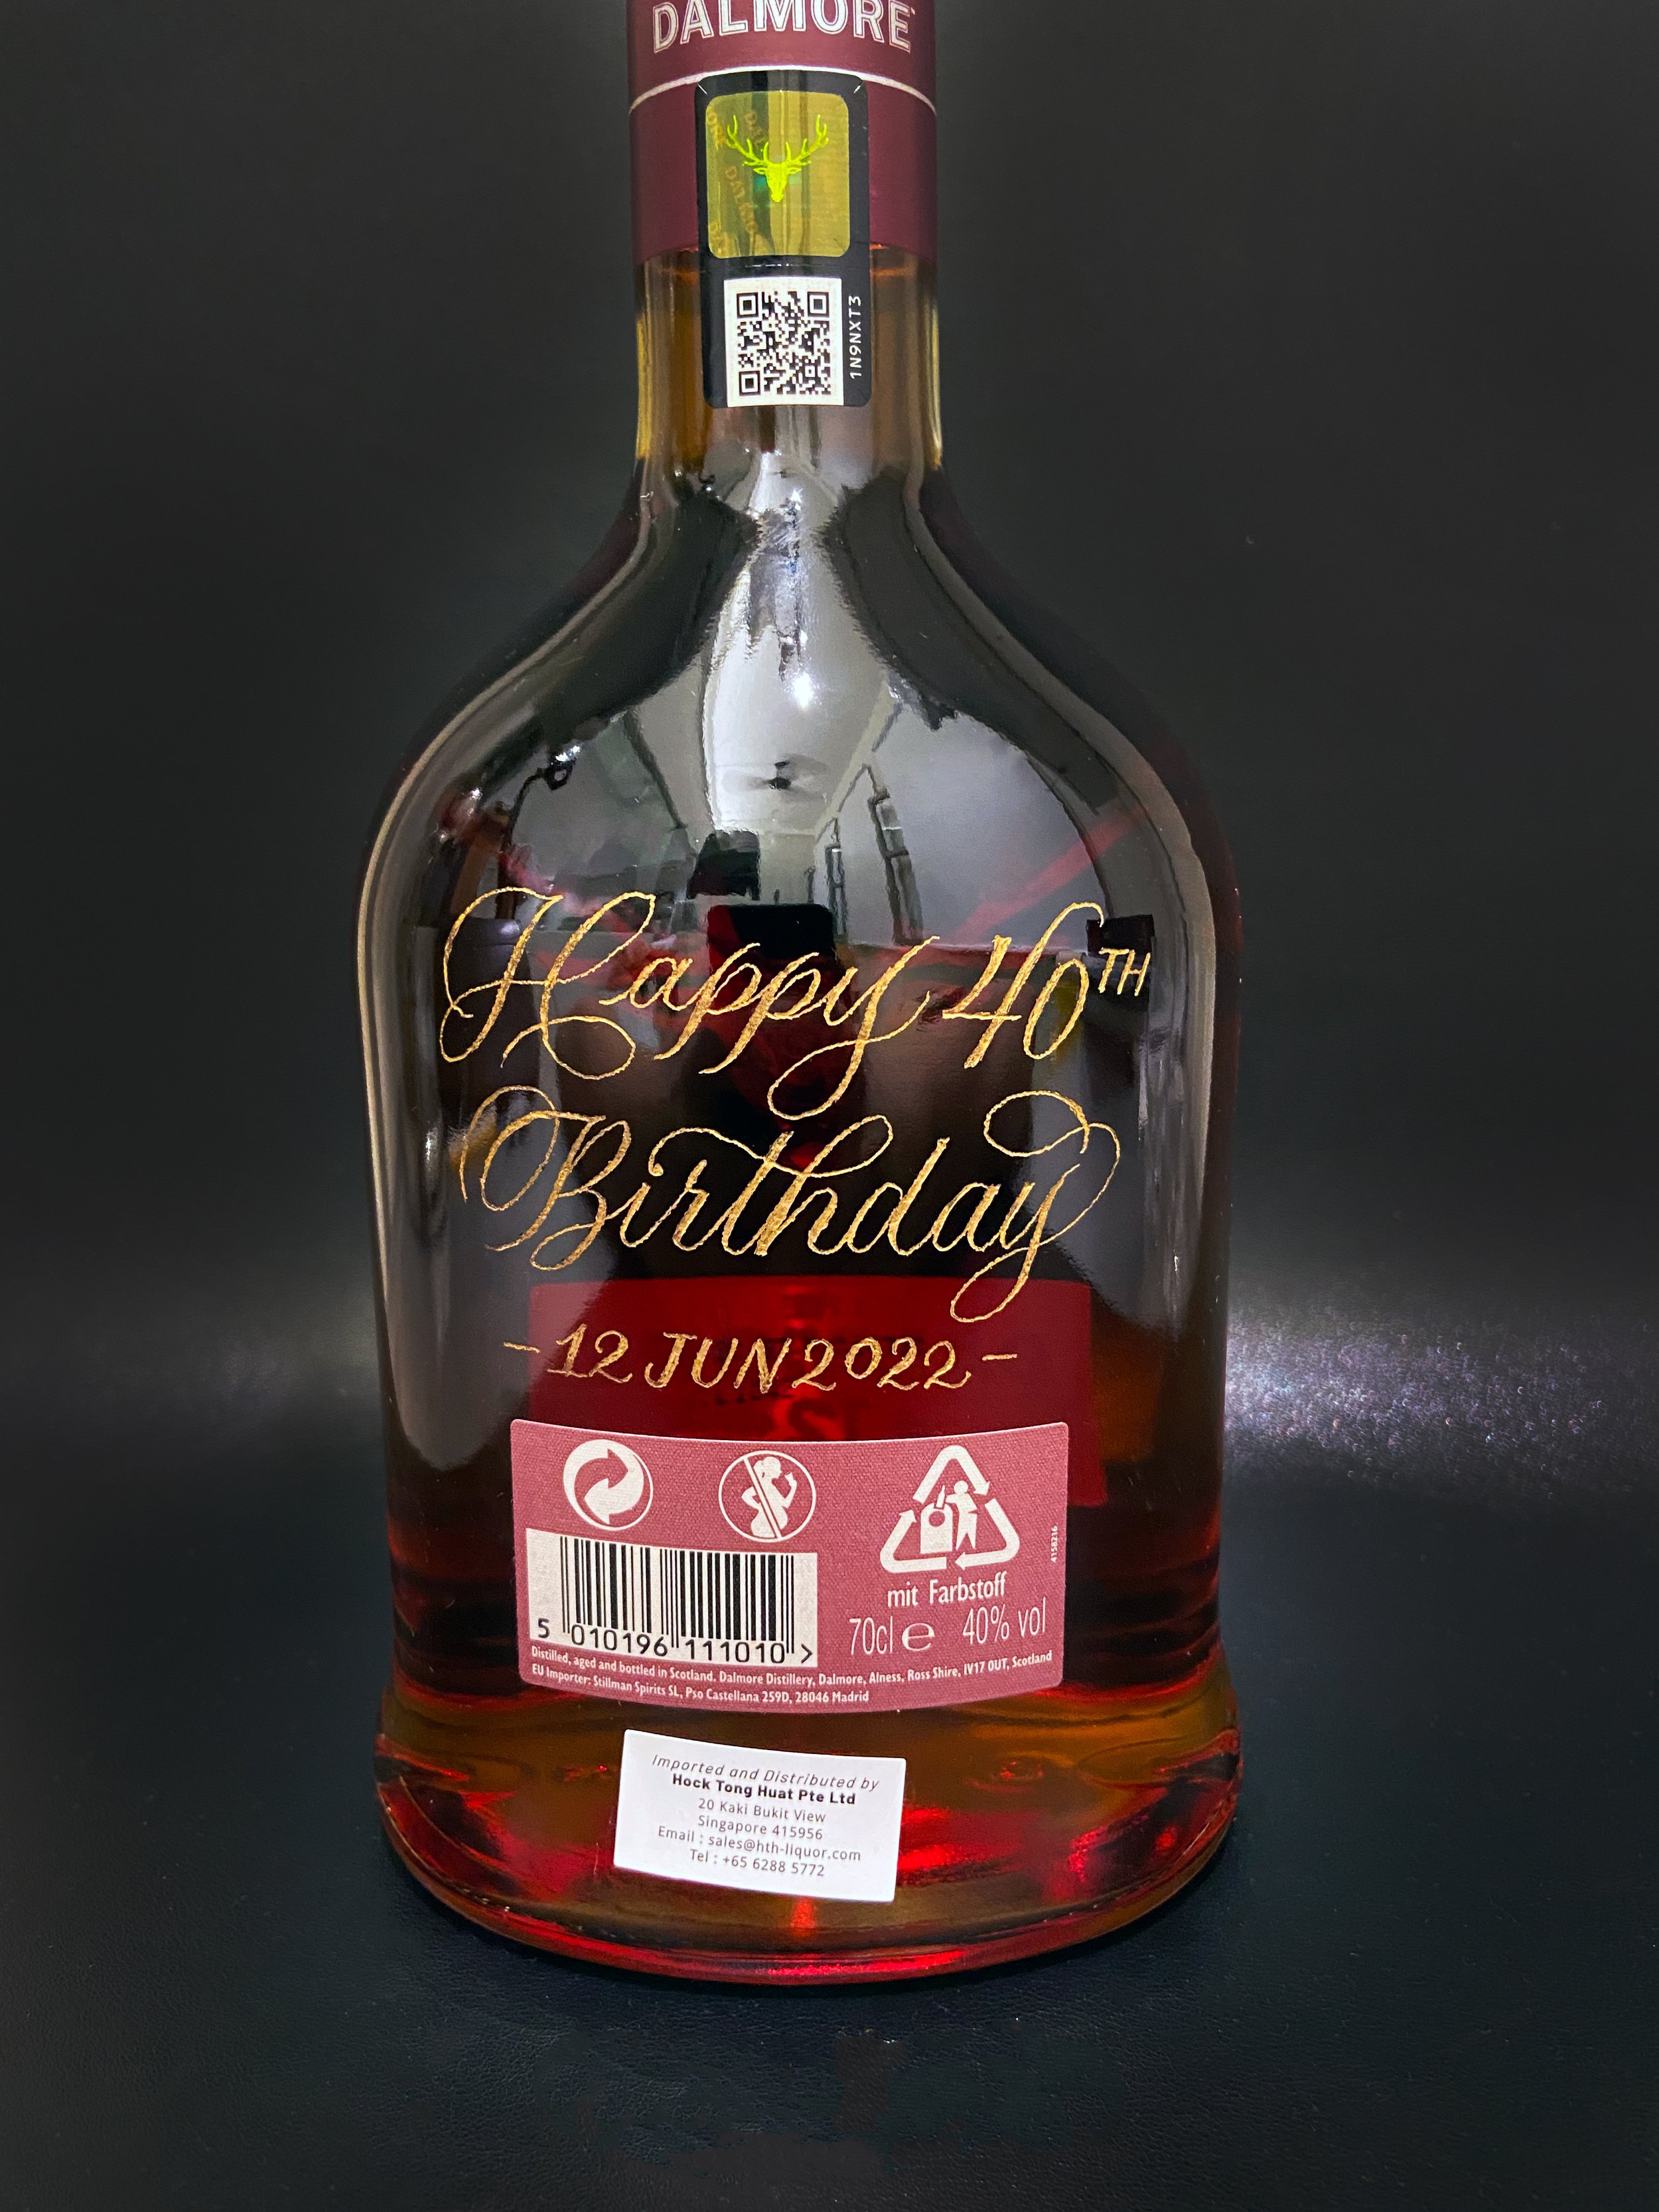 Birthday Calligraphy Engraving on Dalmore Single Highland Malt Scotch Whisky Aged 12 Years